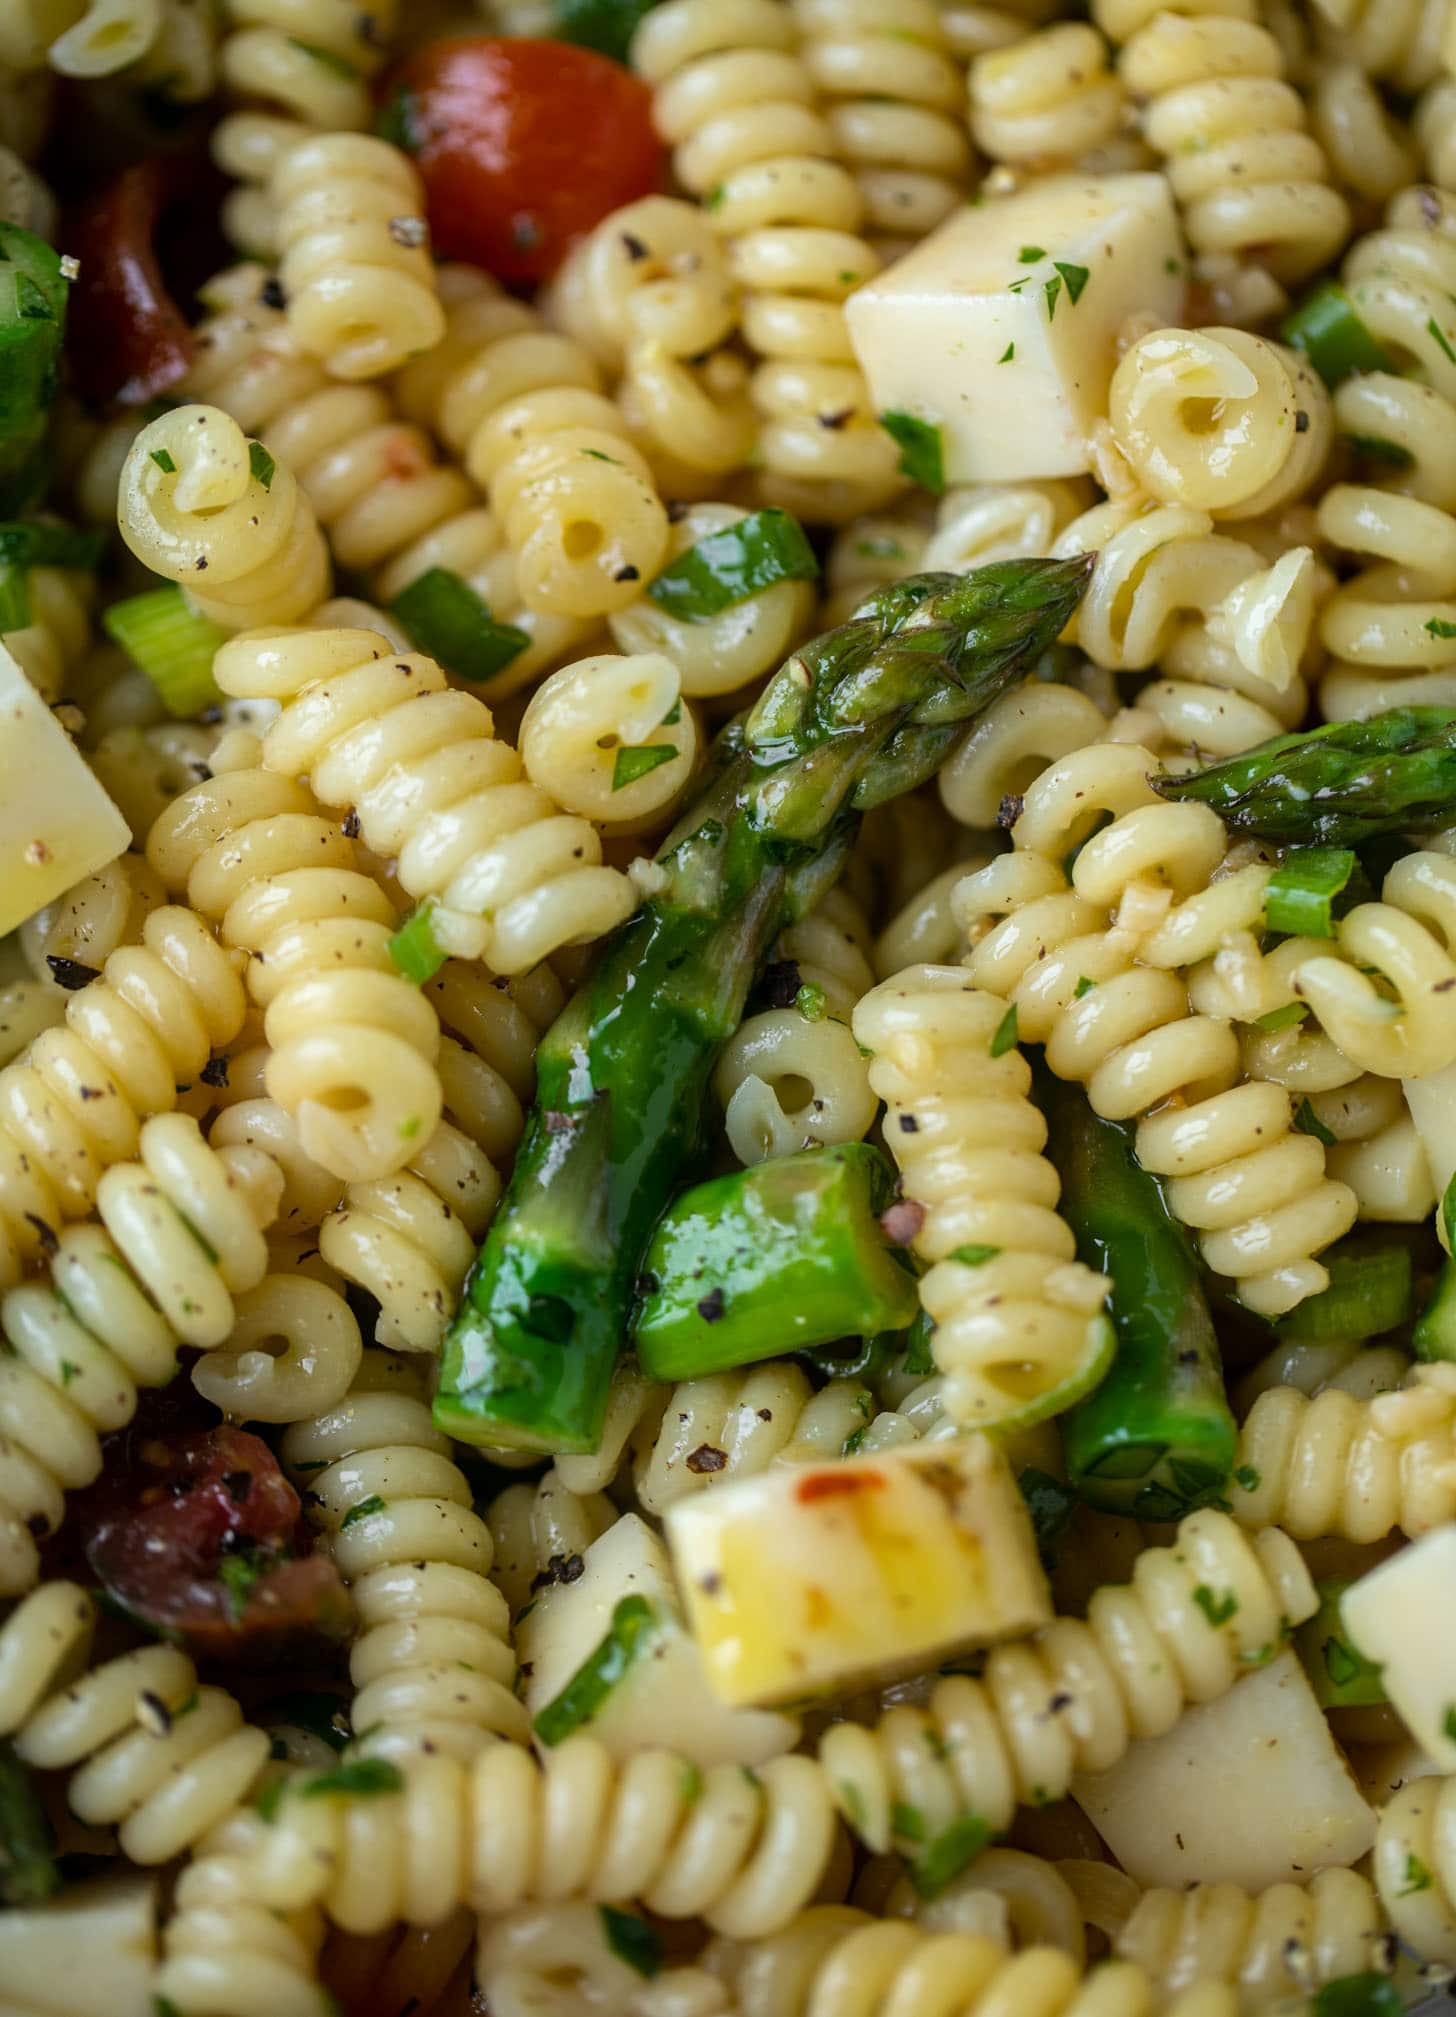 asparagus pasta salad with honey mustard dressing